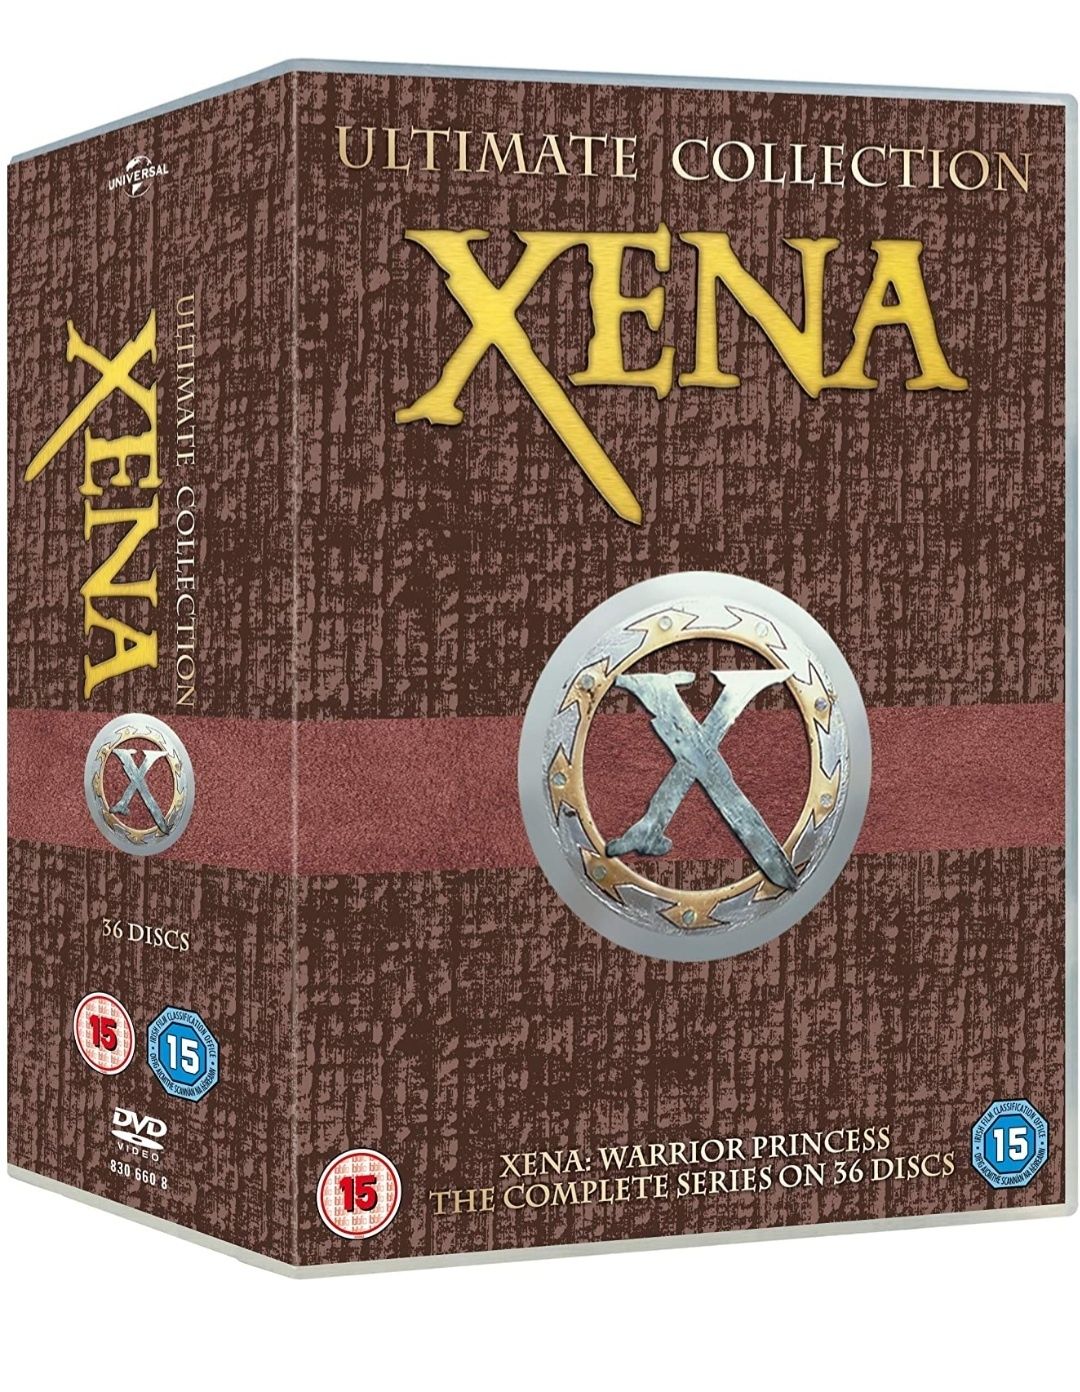 FILM SERIAL Xena Warrior Princess Ultimate Collection 1-6 Original